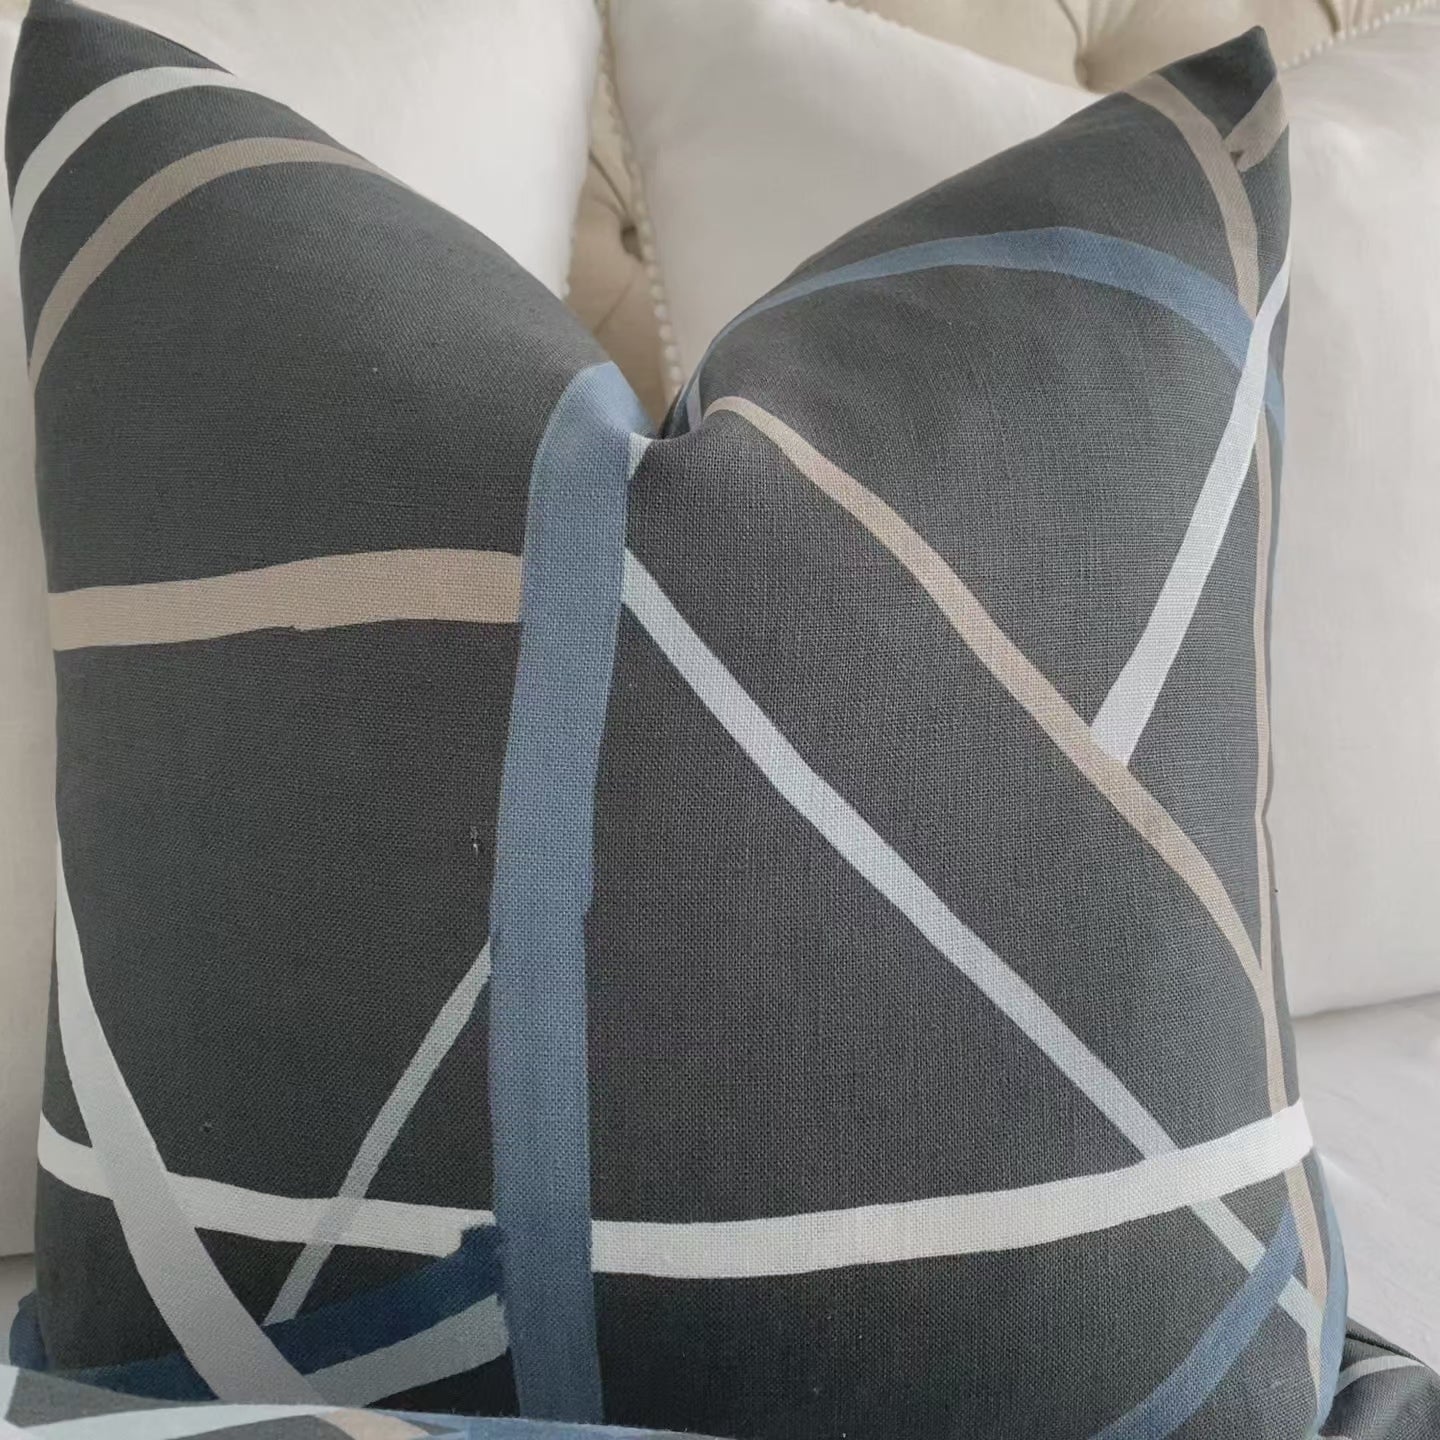 Kelly Wearstler Simpatico Raven Striped Dark Gray Designer Decorative Throw Pillow Cover Product Video